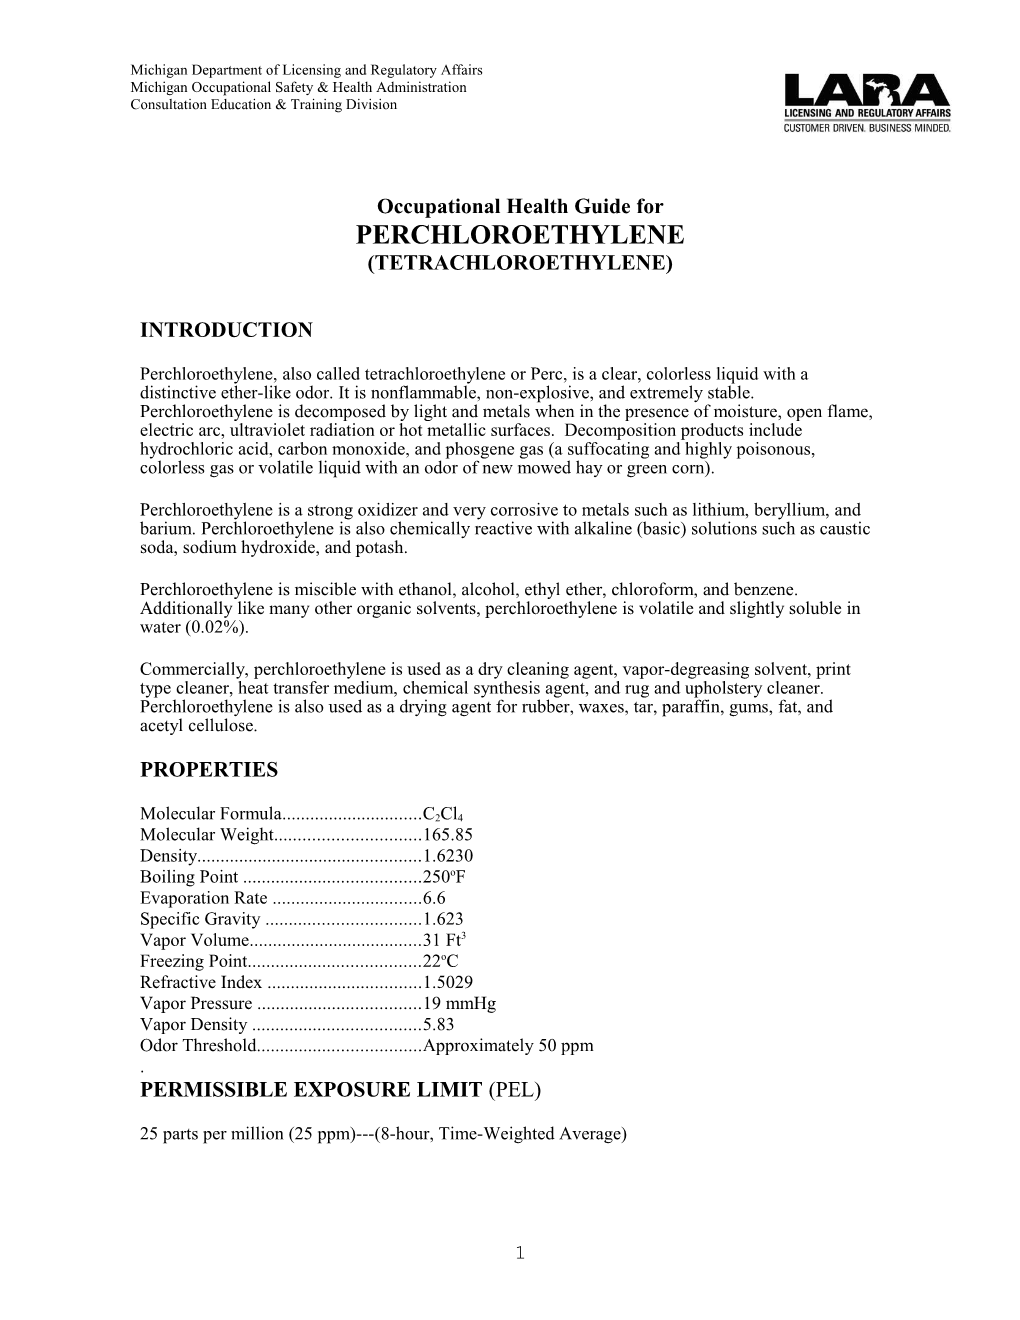 Occupational Health Guide For Perchloroethylene